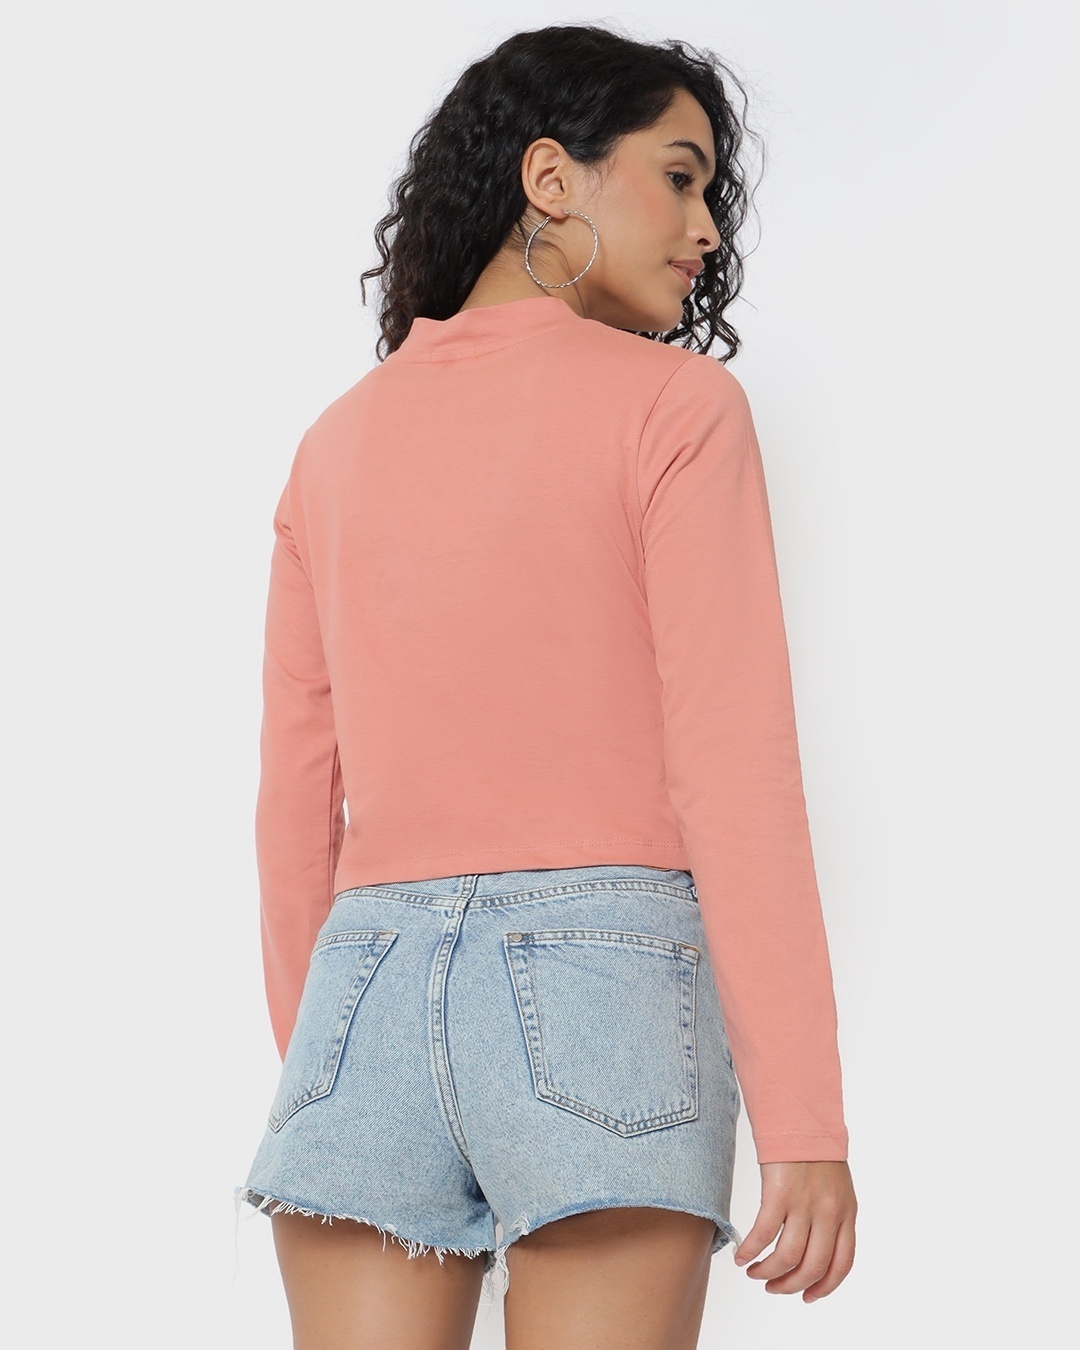 Shop Women's Pink Slim Fit Snug Top-Design